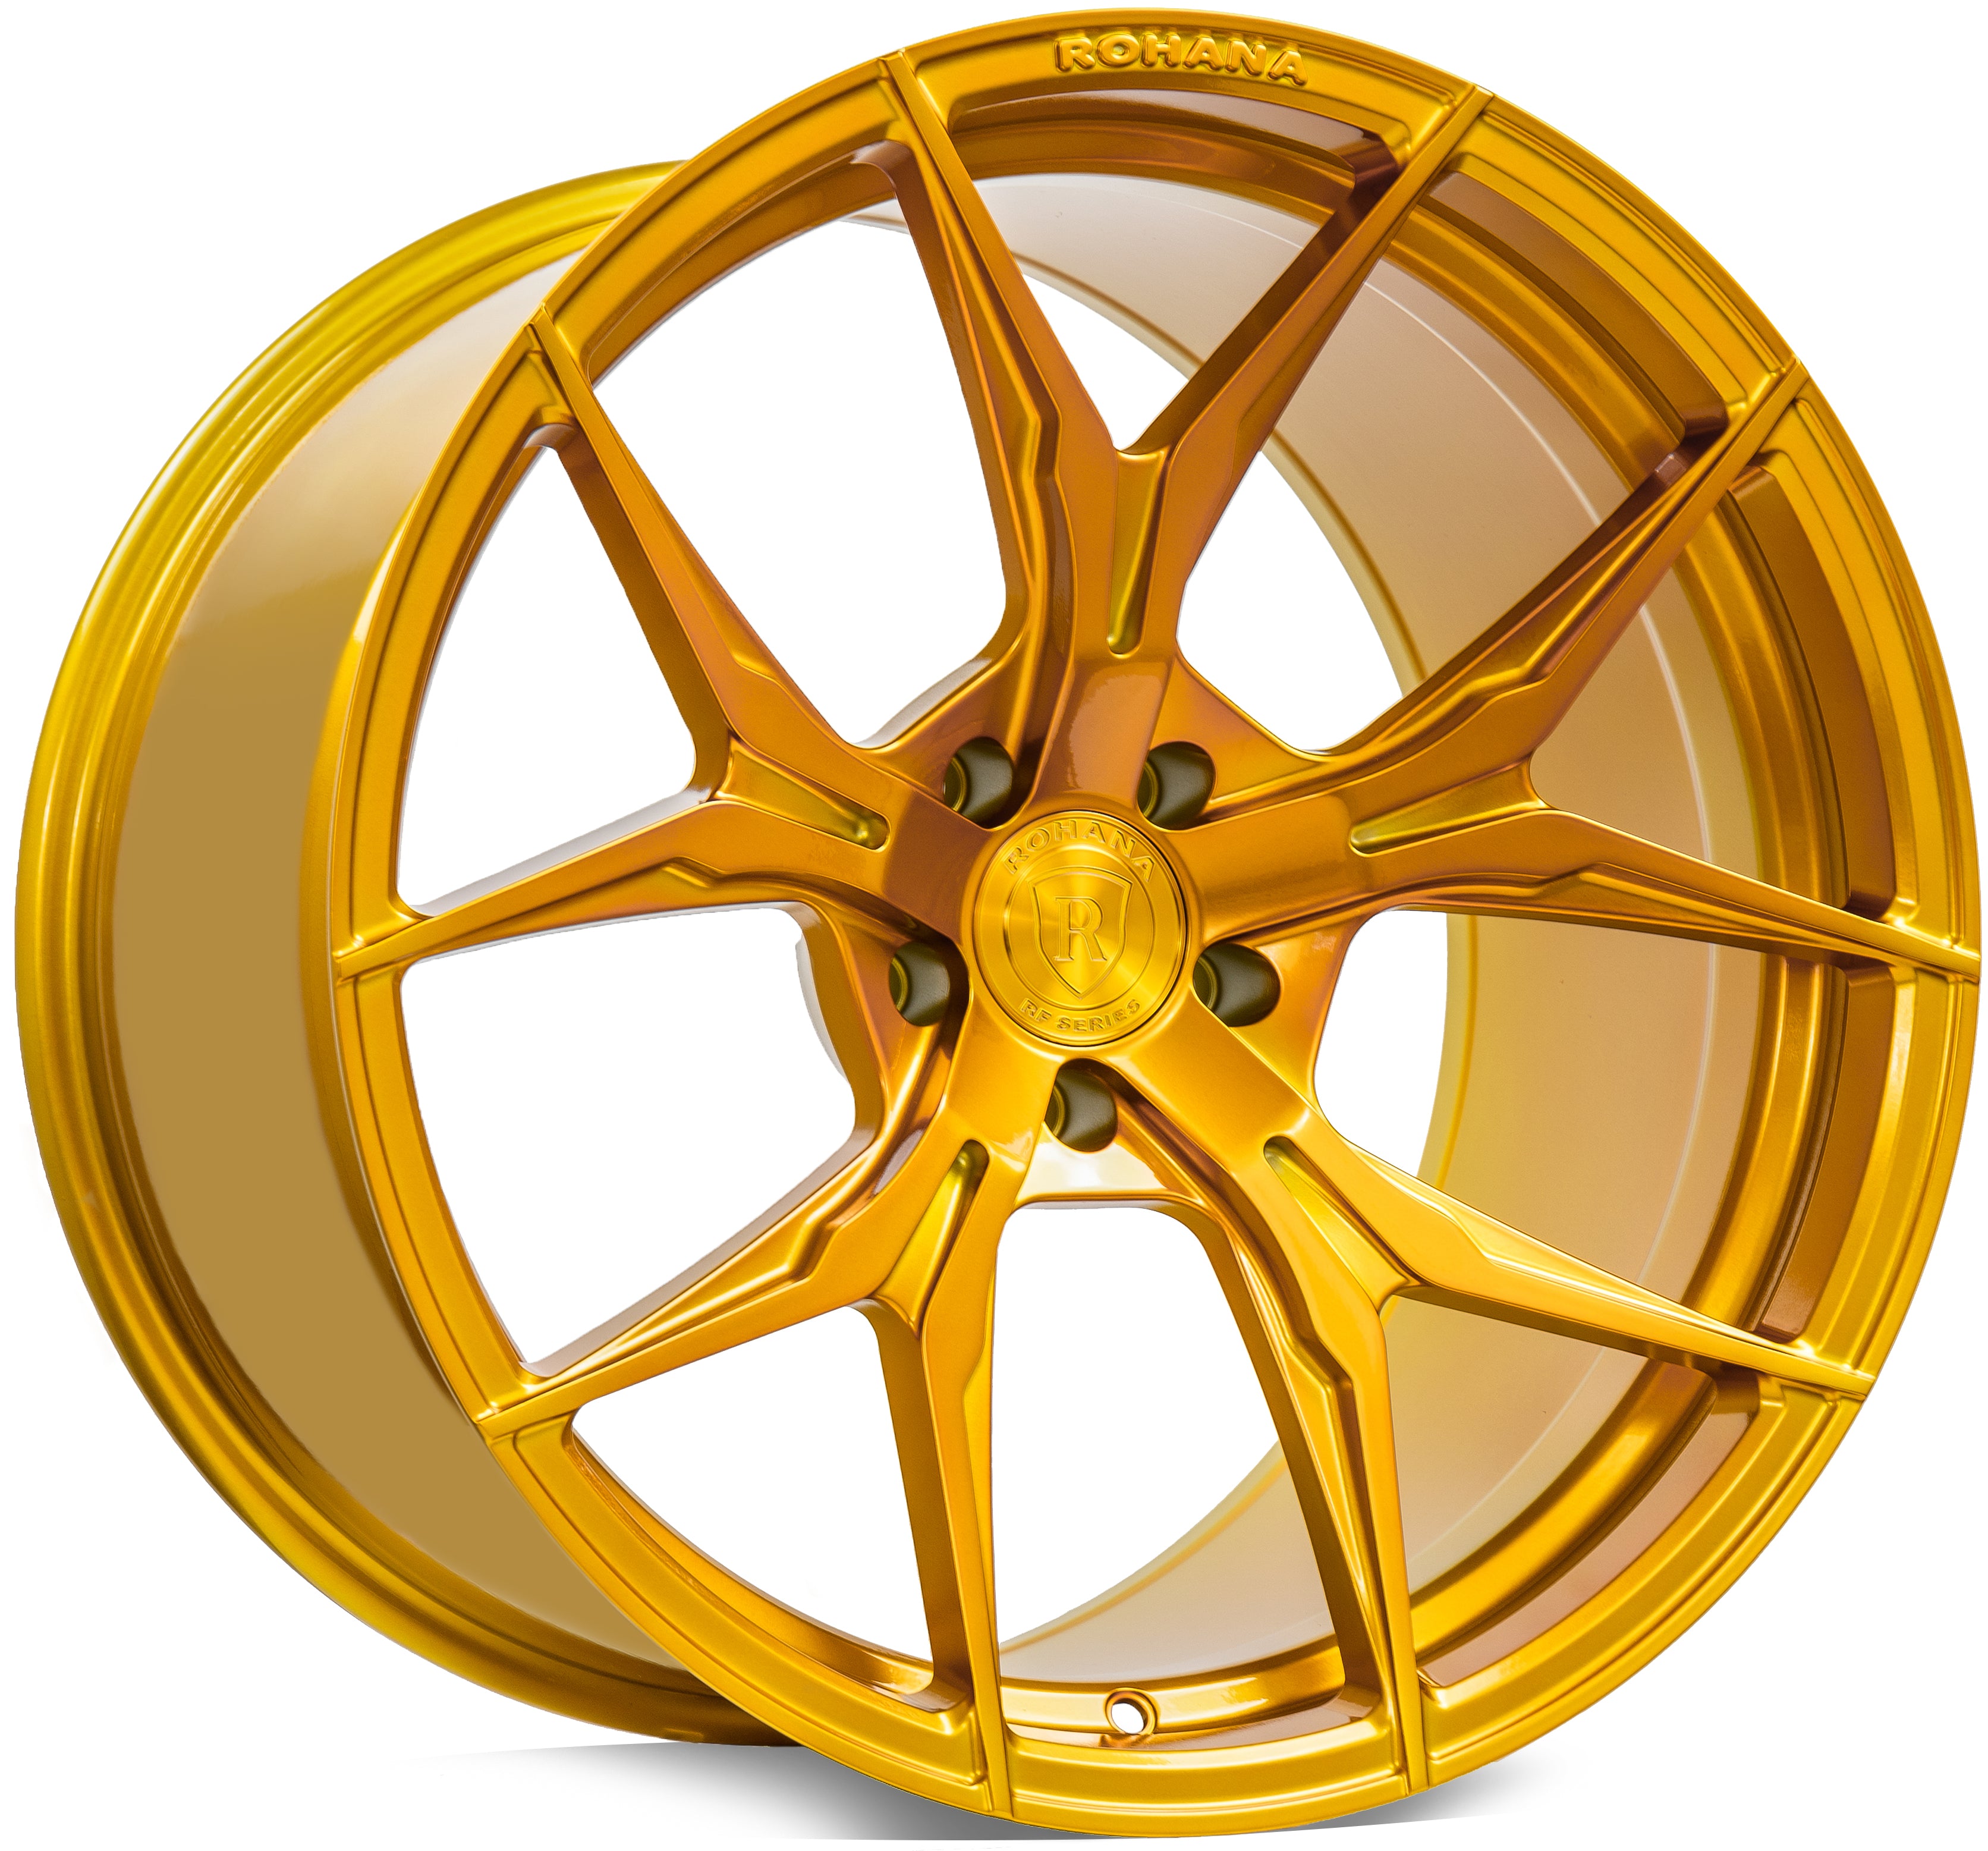 20" Rohana RFX5 Wheels- Set of 4 - Motorsports LA